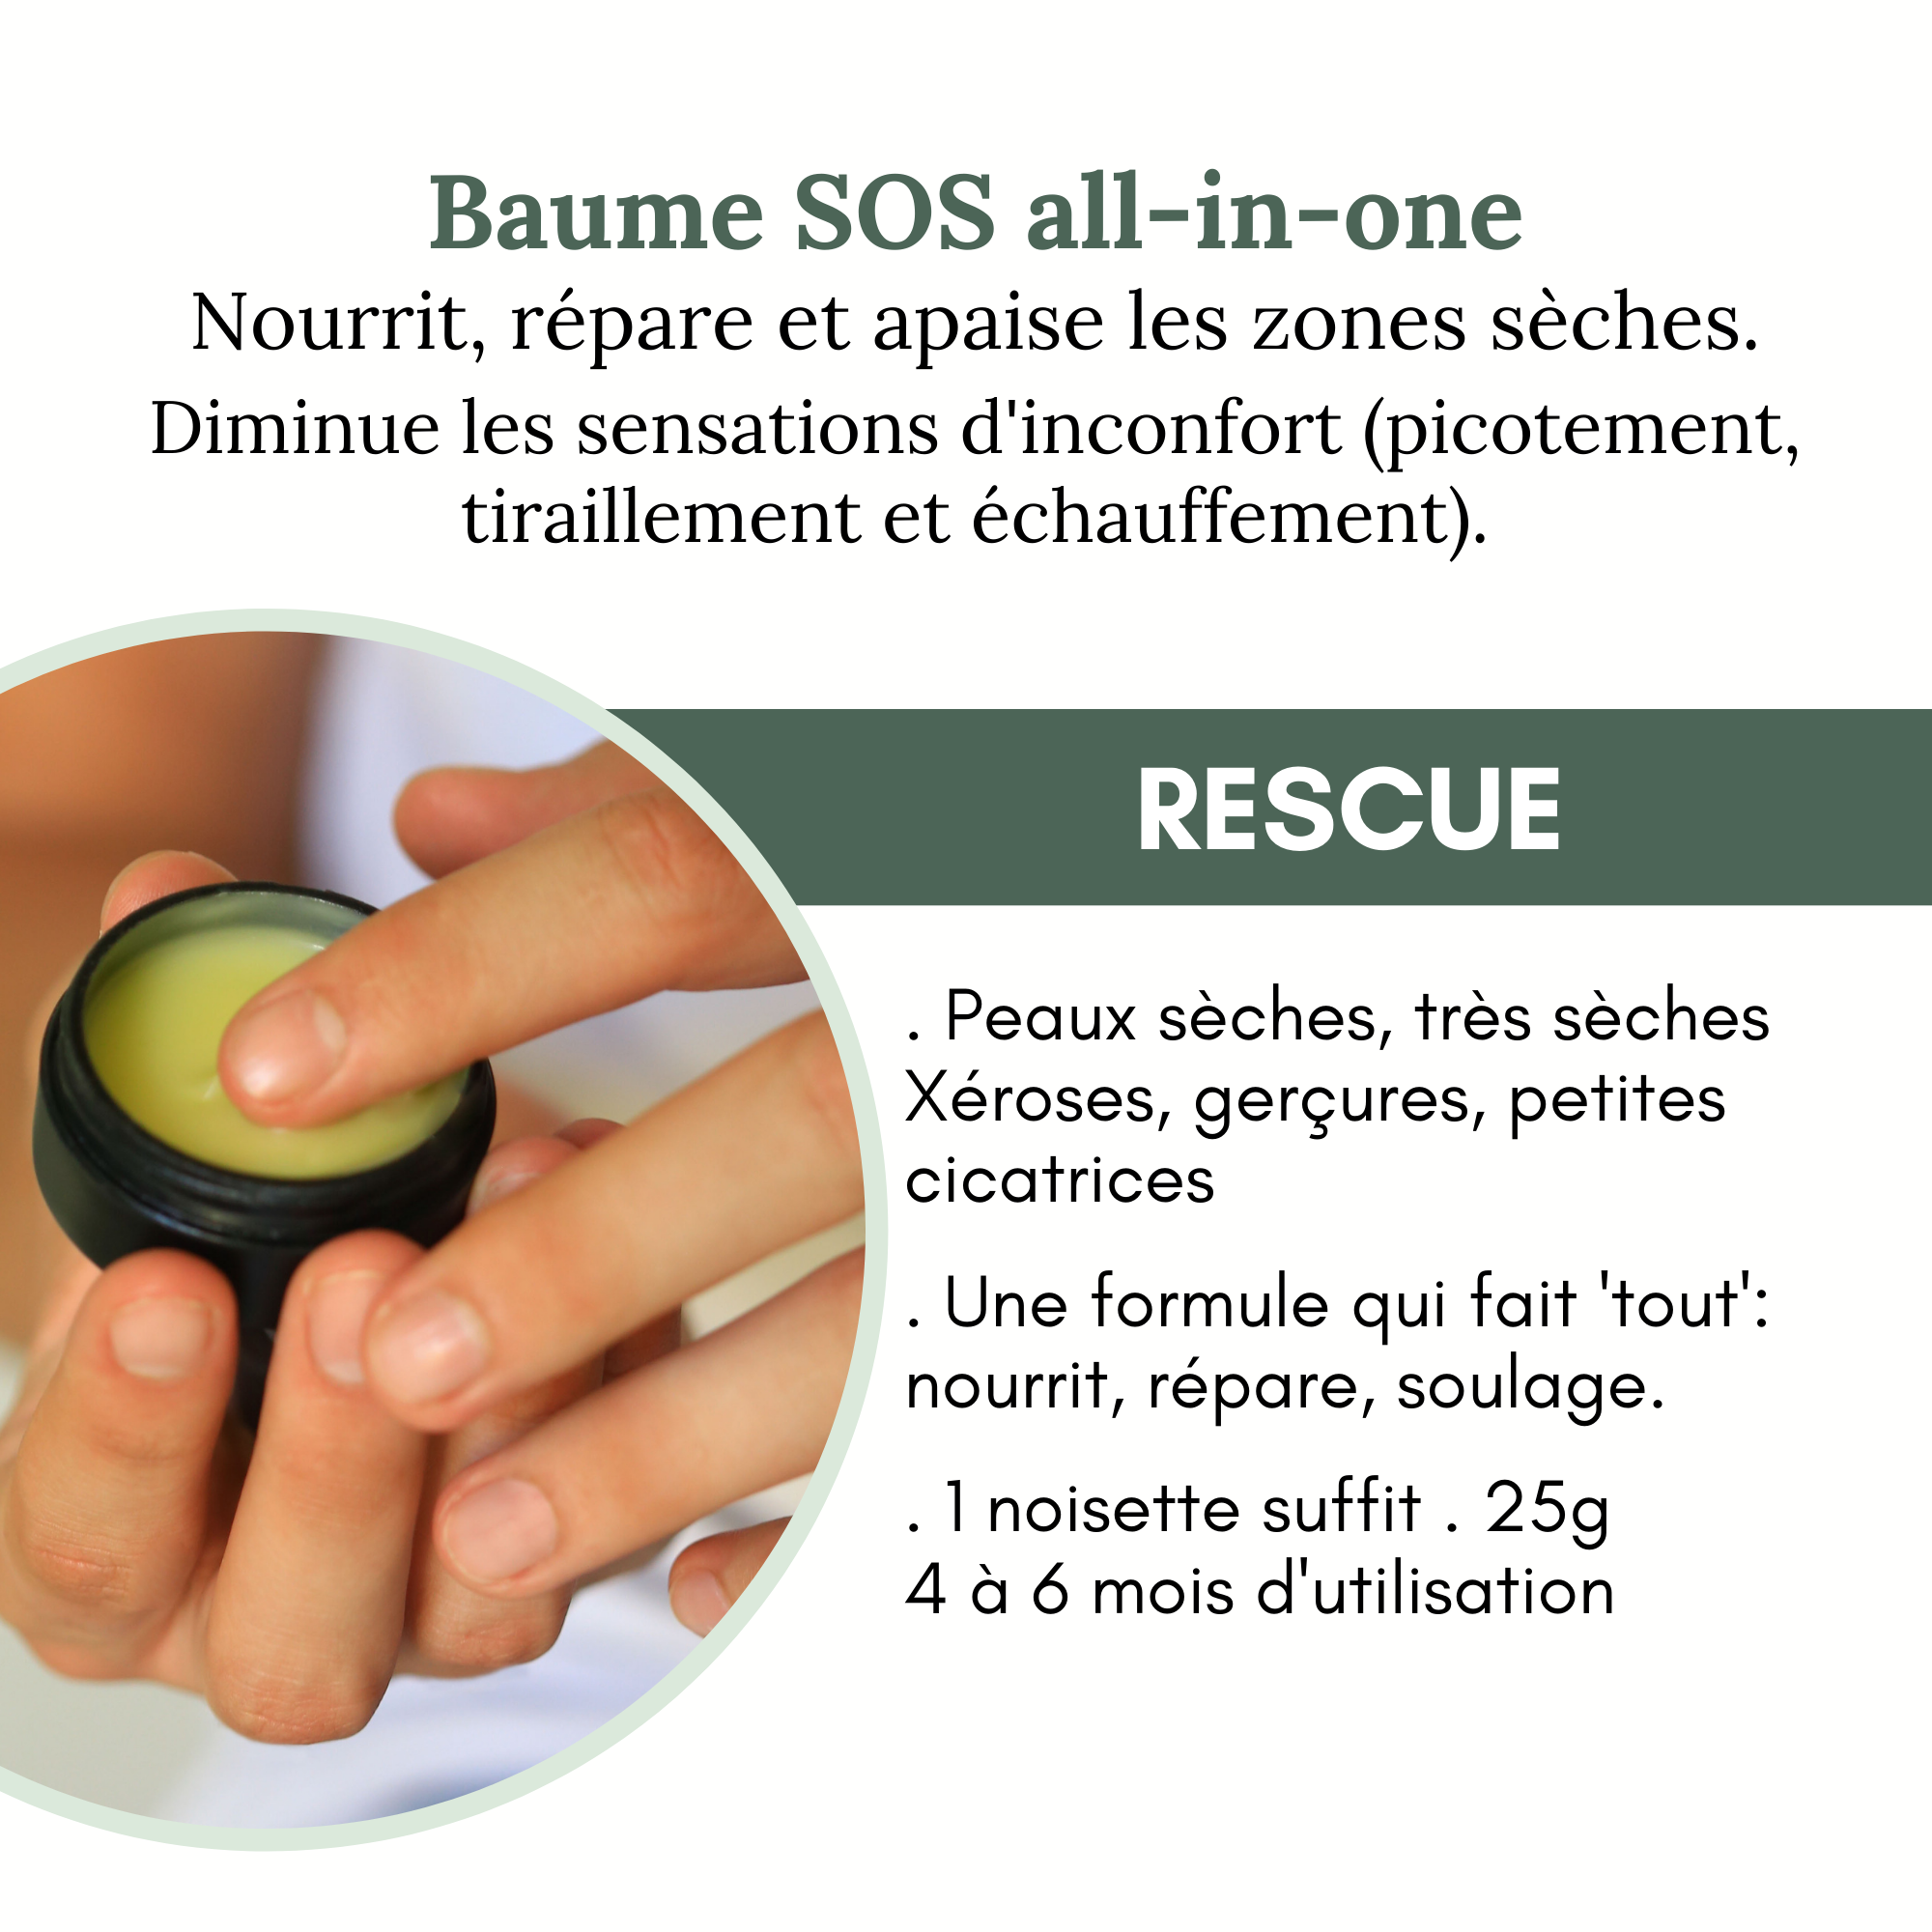 Baume SOS RESCUE